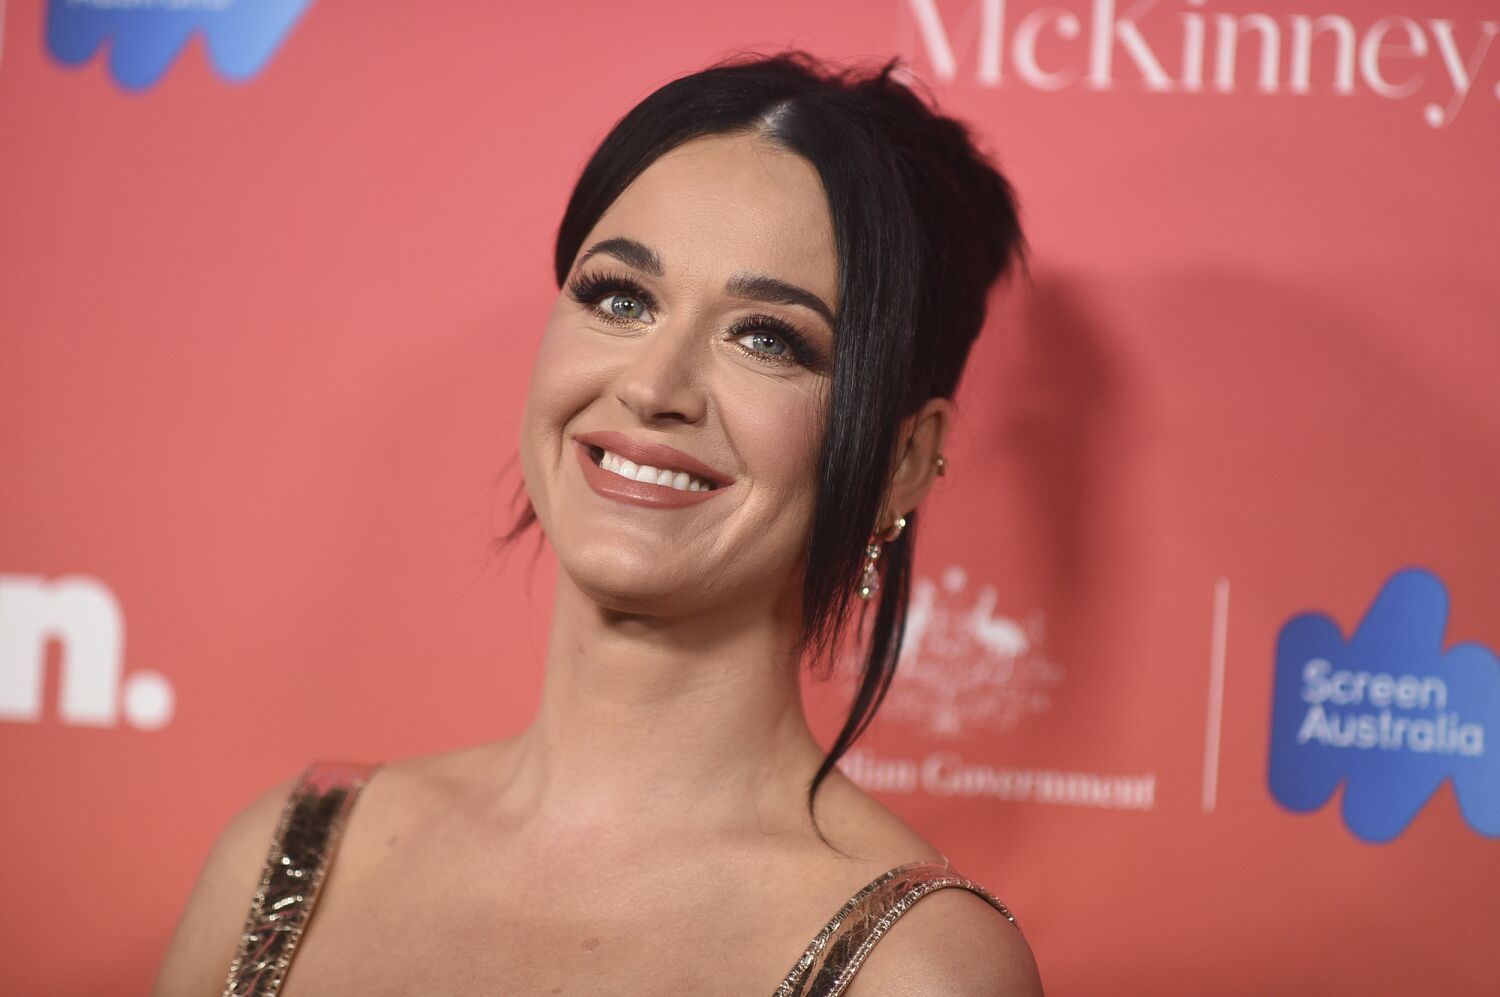 'American Idol' singer's gun violence story left Katy Perry in tears, wanting 'change'